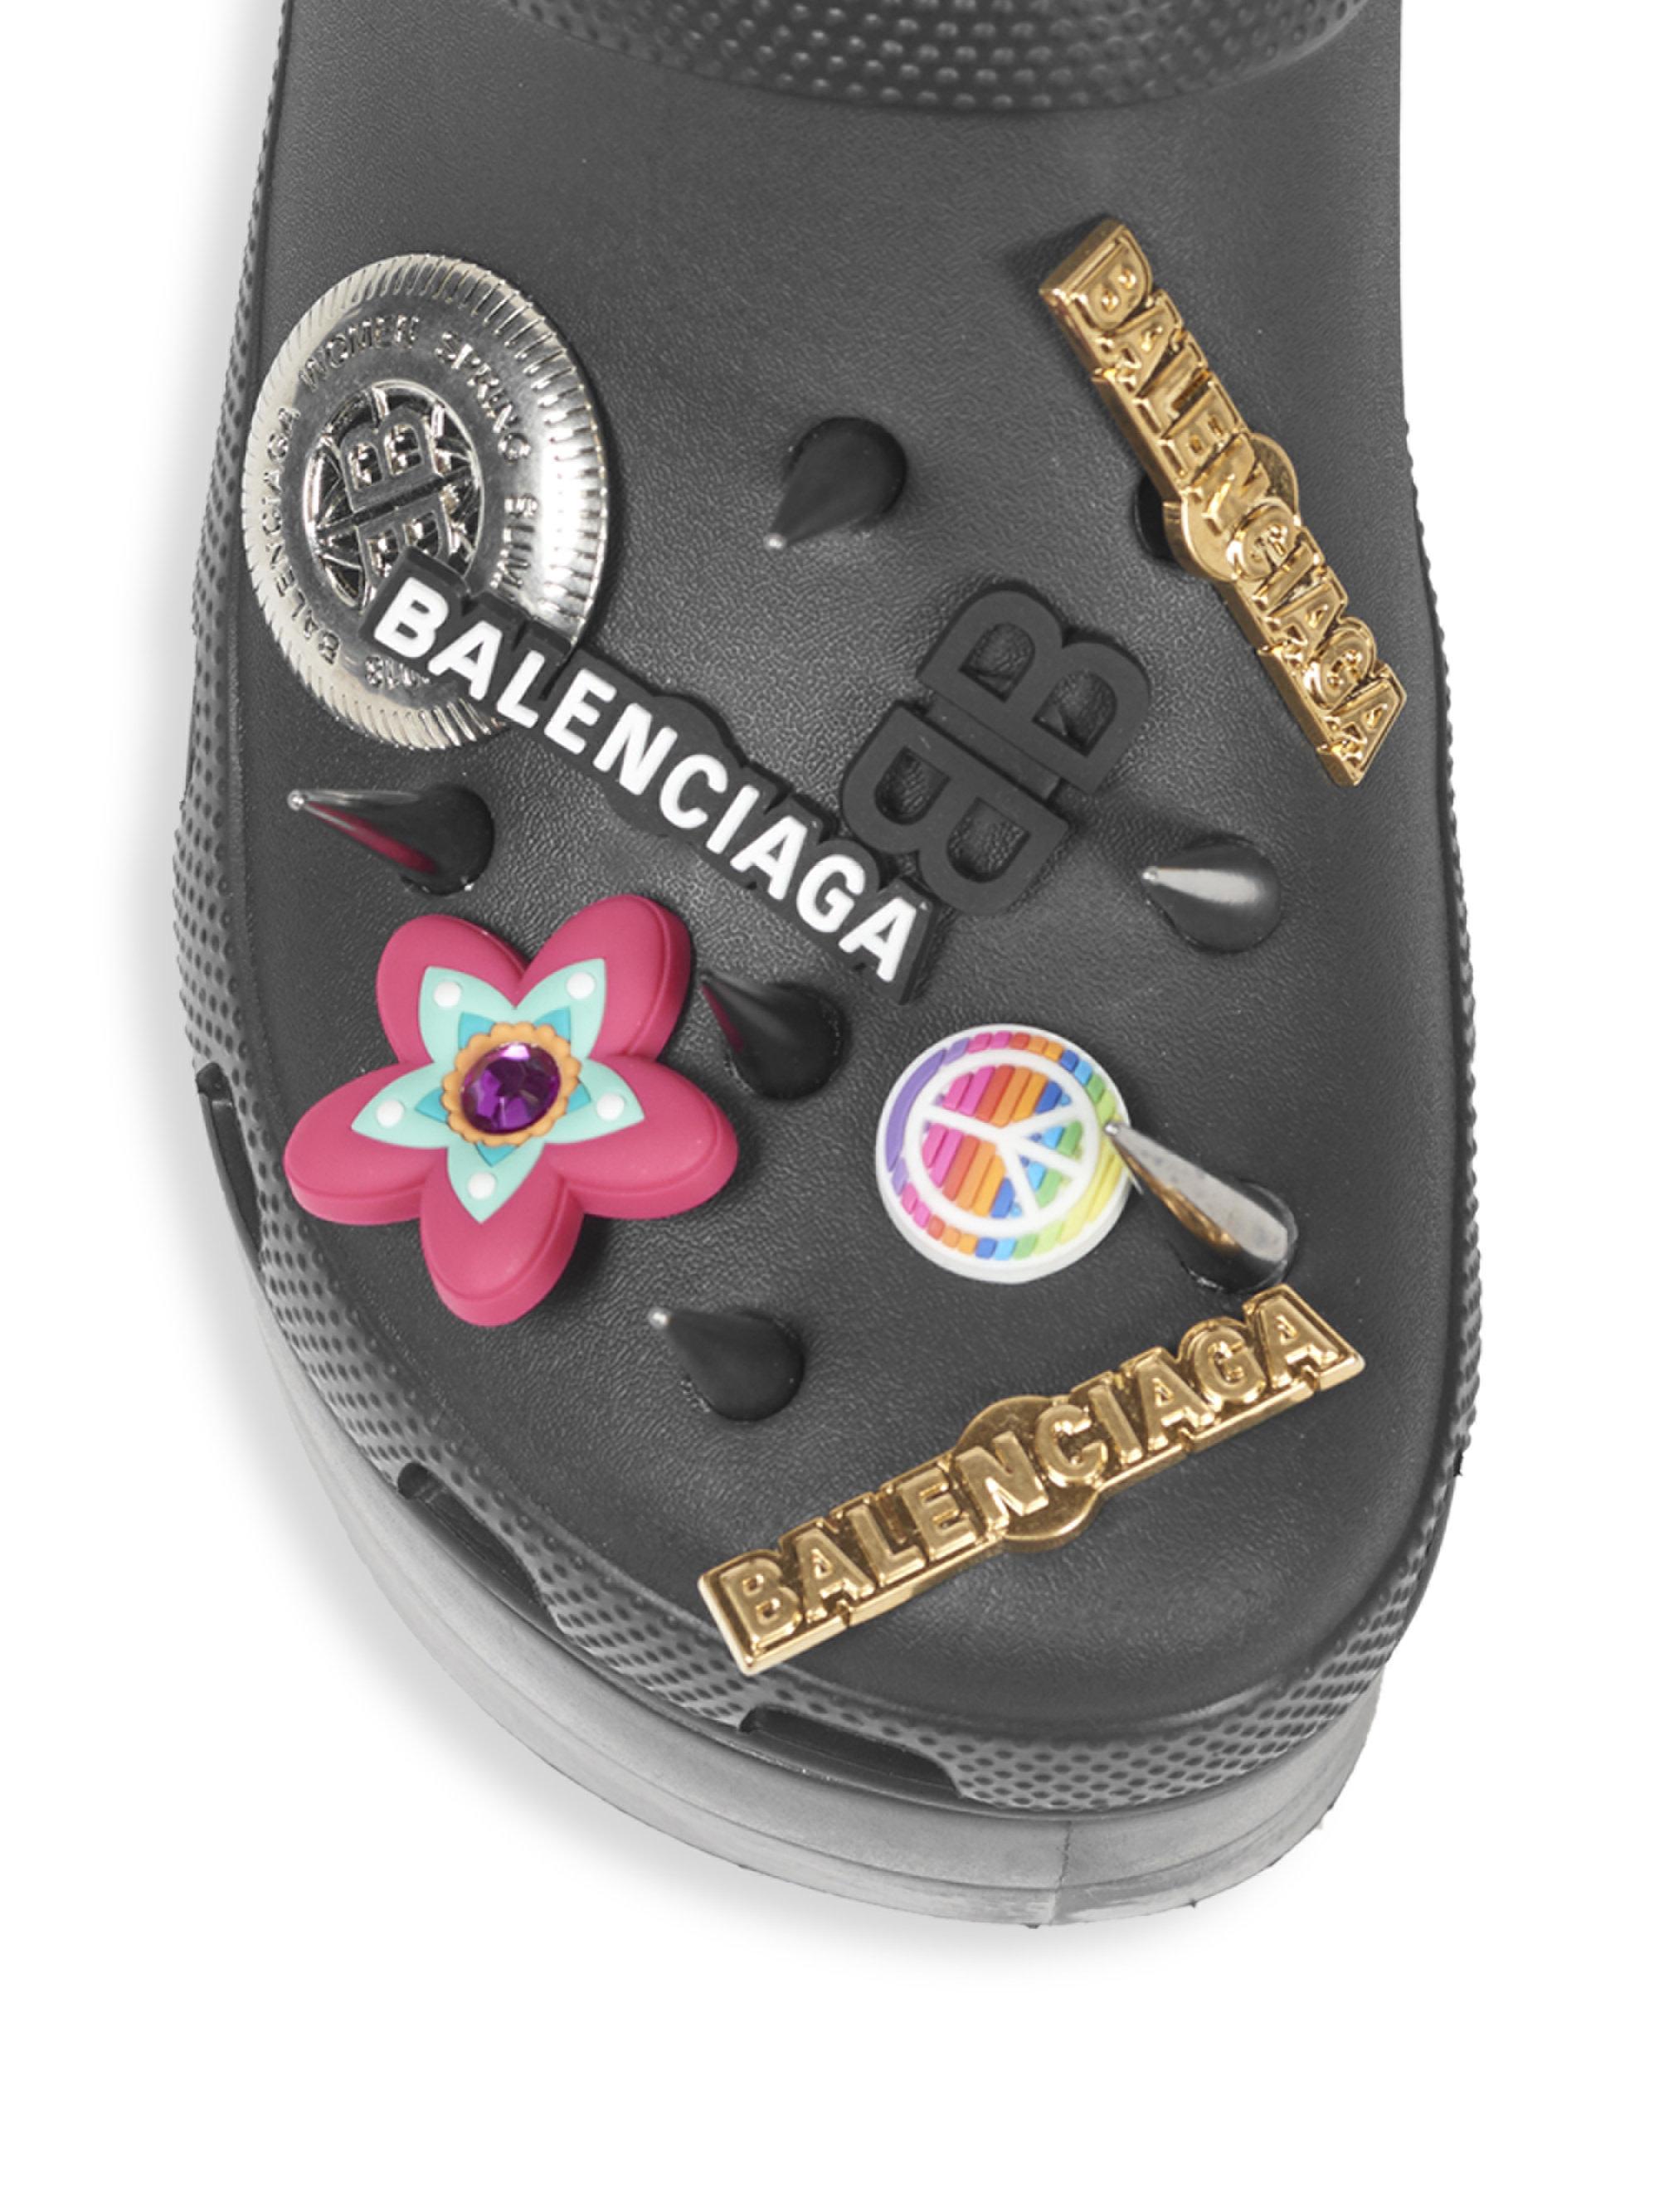 The Balenciaga x Crocs Collaboration  THE CAROLINIAN